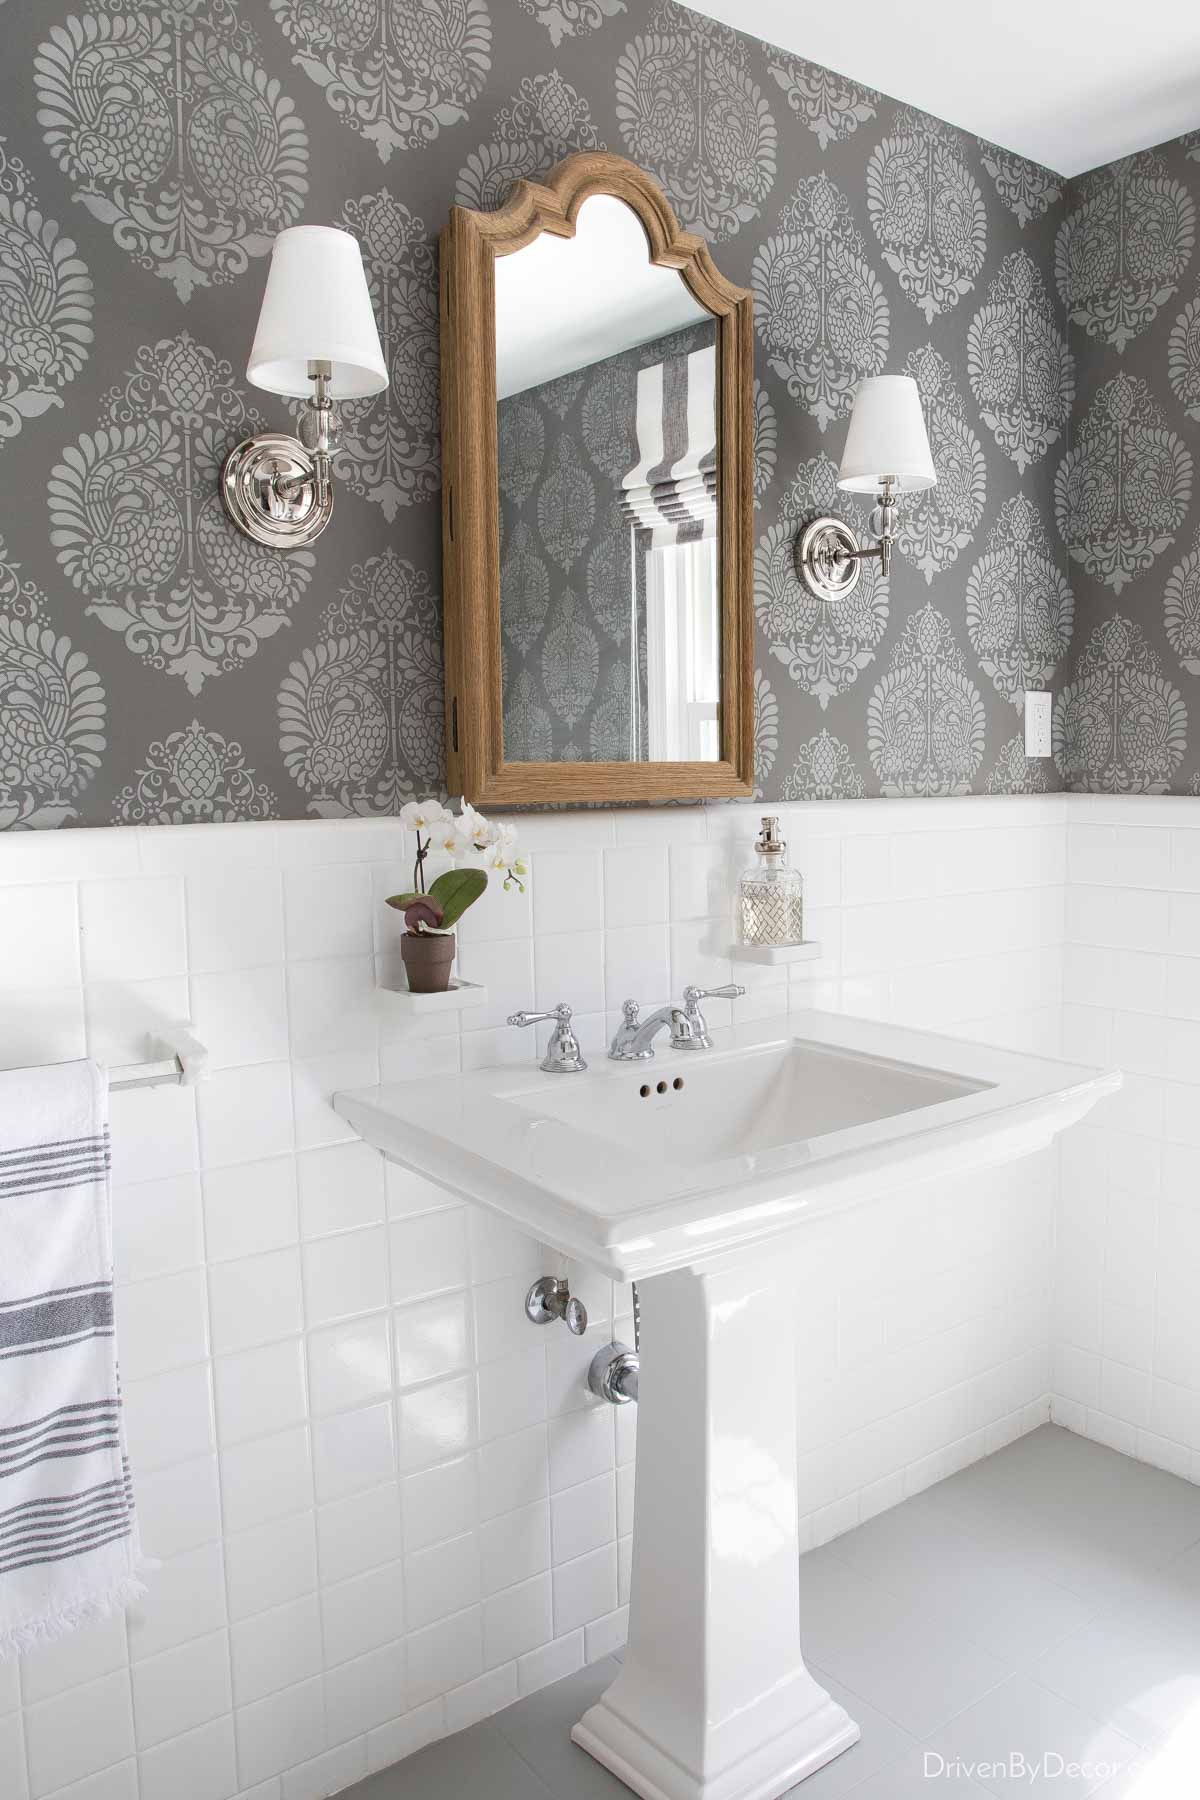 Bathroom Wallpaper: Is It a Good Idea?? - Driven by Decor